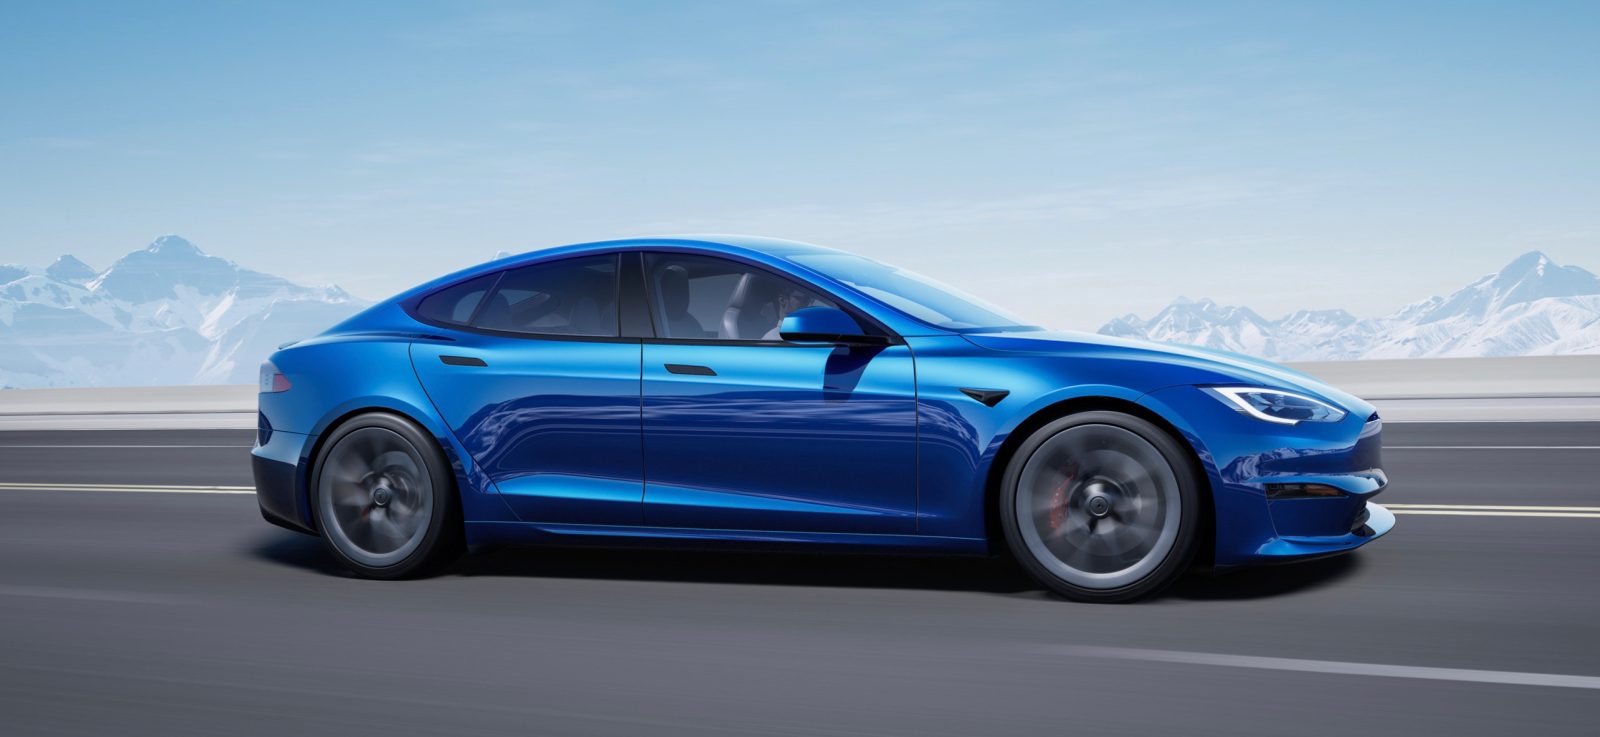 Tesla warns new Model S Plaid won't hit advertised 200 mph at launch, needs  tire/wheel upgrade - Electrek